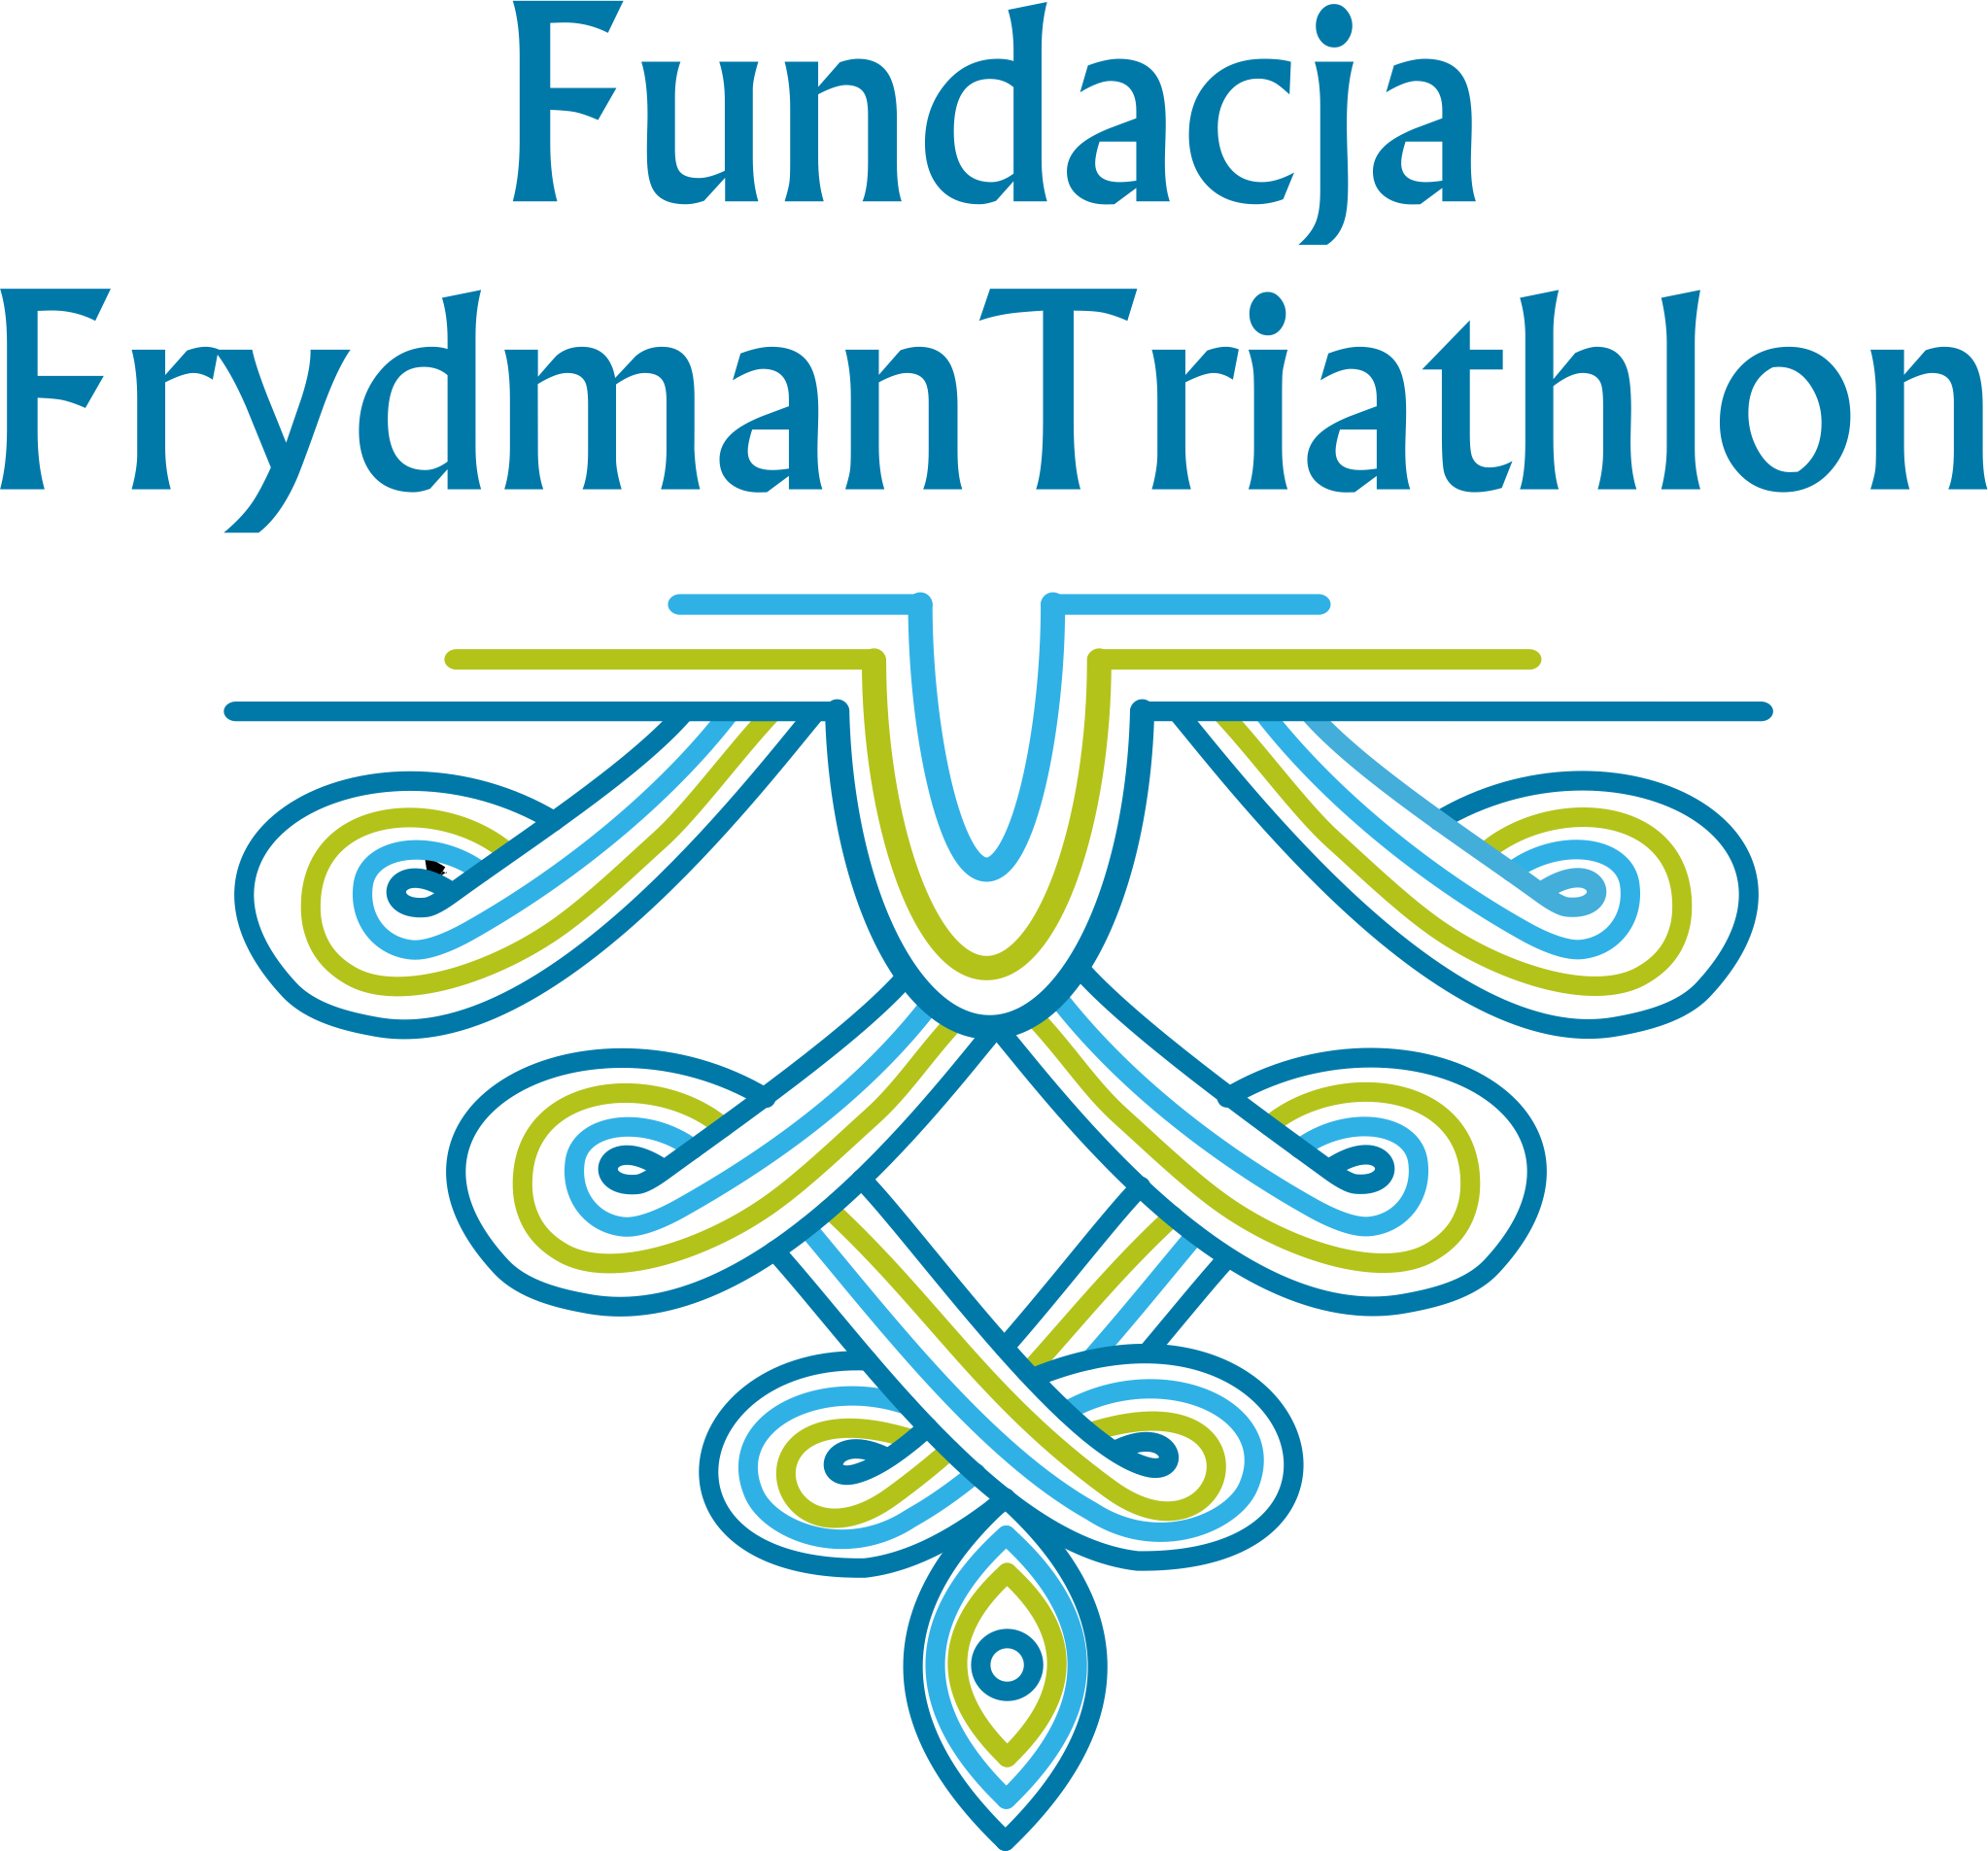 Funadcja Frydman Triathlon